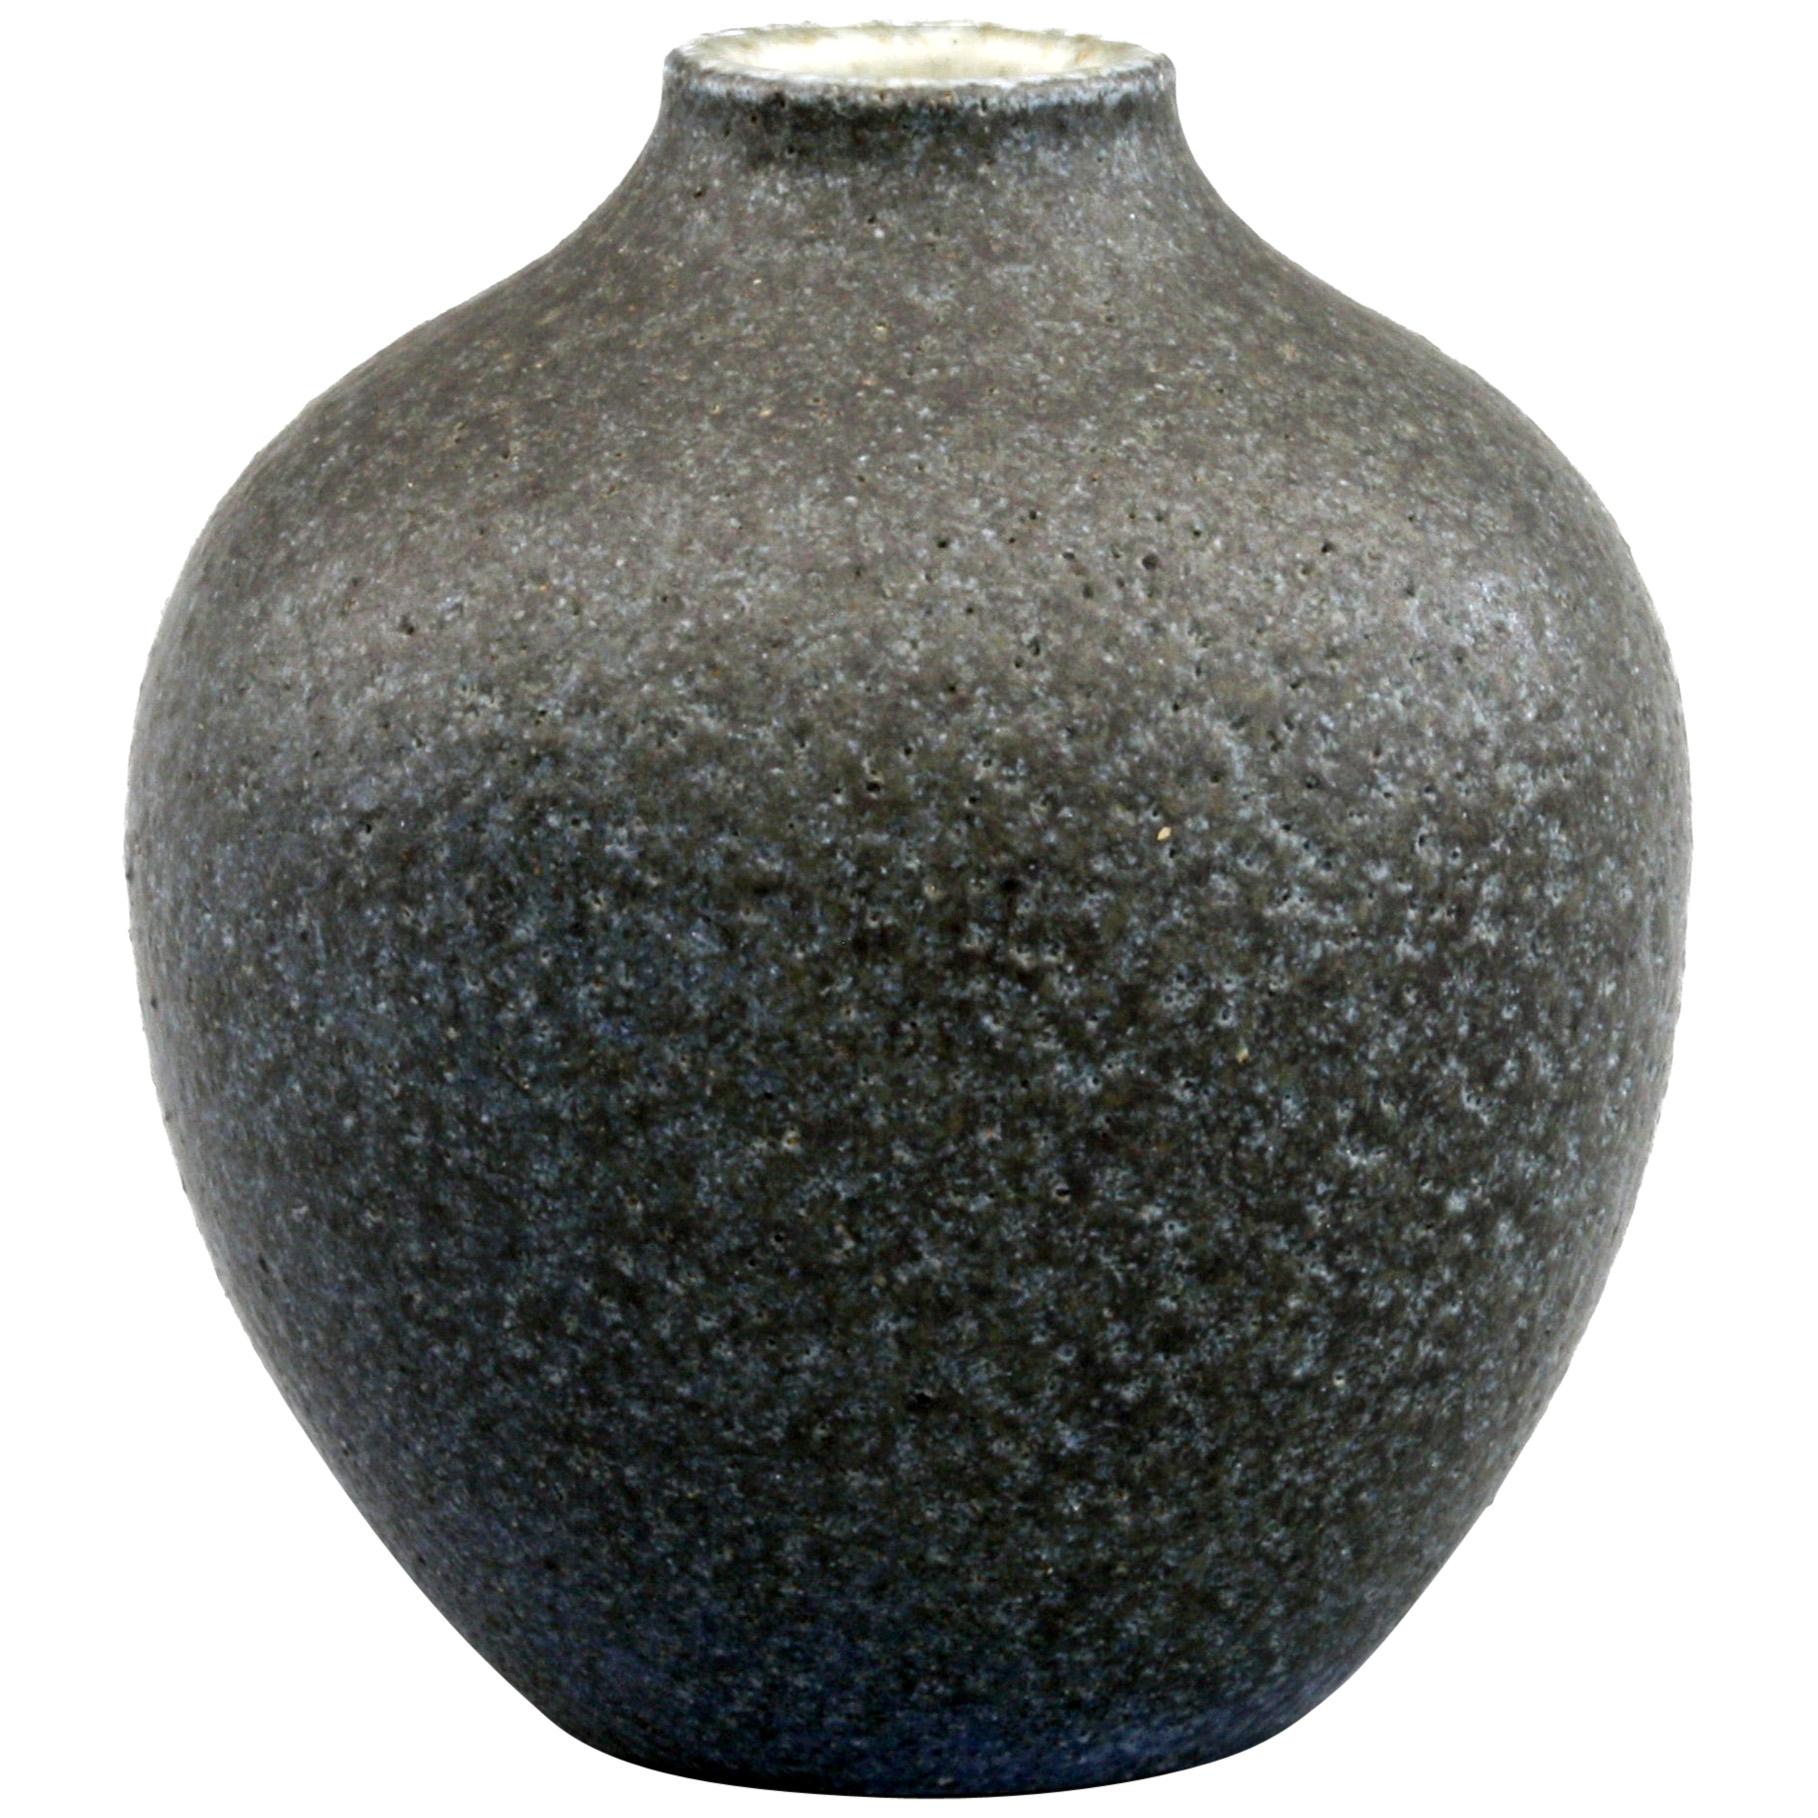 Martin Brothers Art Pottery Black Textured Glaze Vase by Walter Martin, 1901